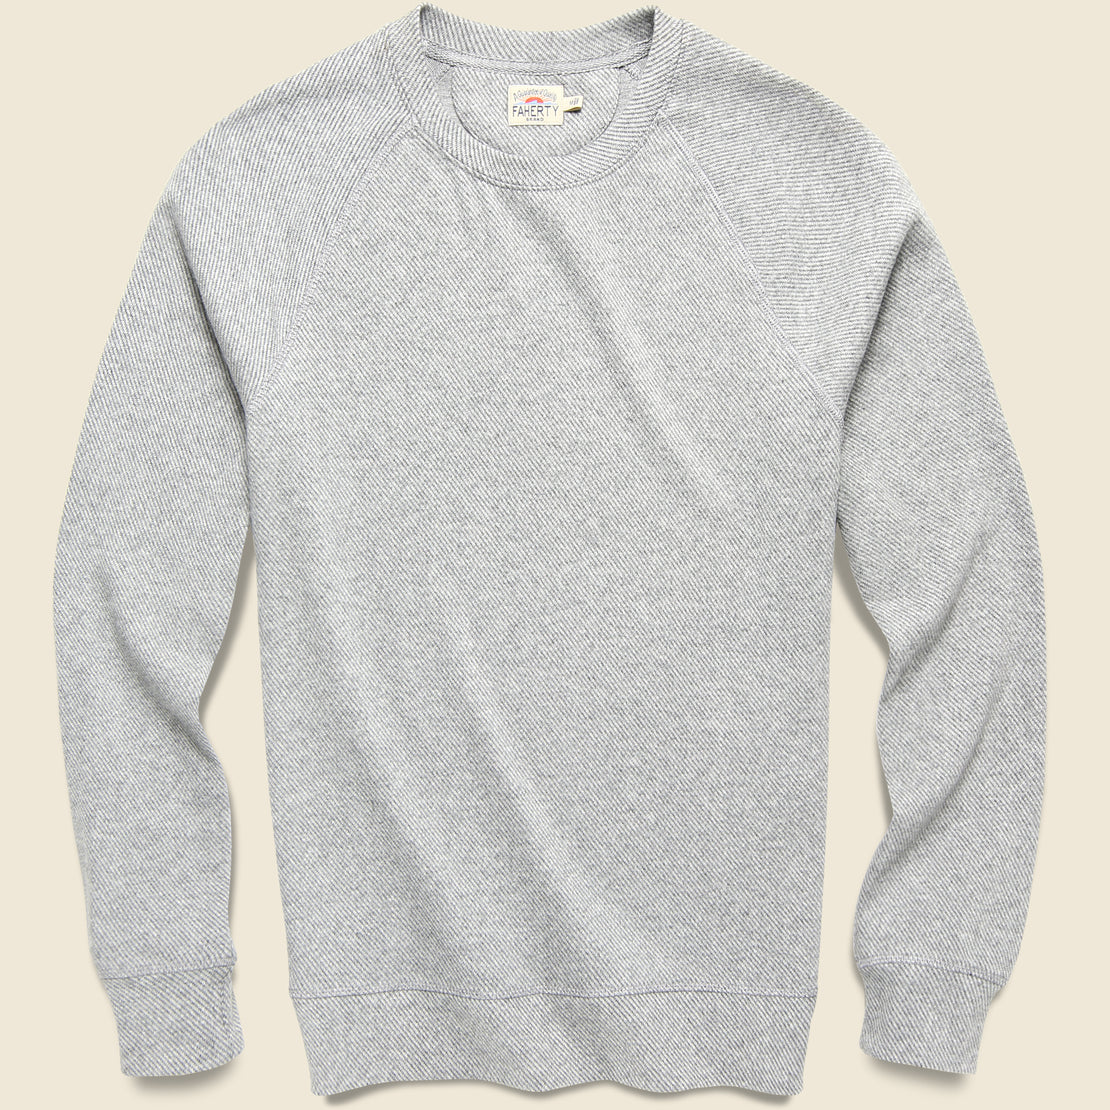 Faherty Legend Sweater Crew - Fossil Grey Twill